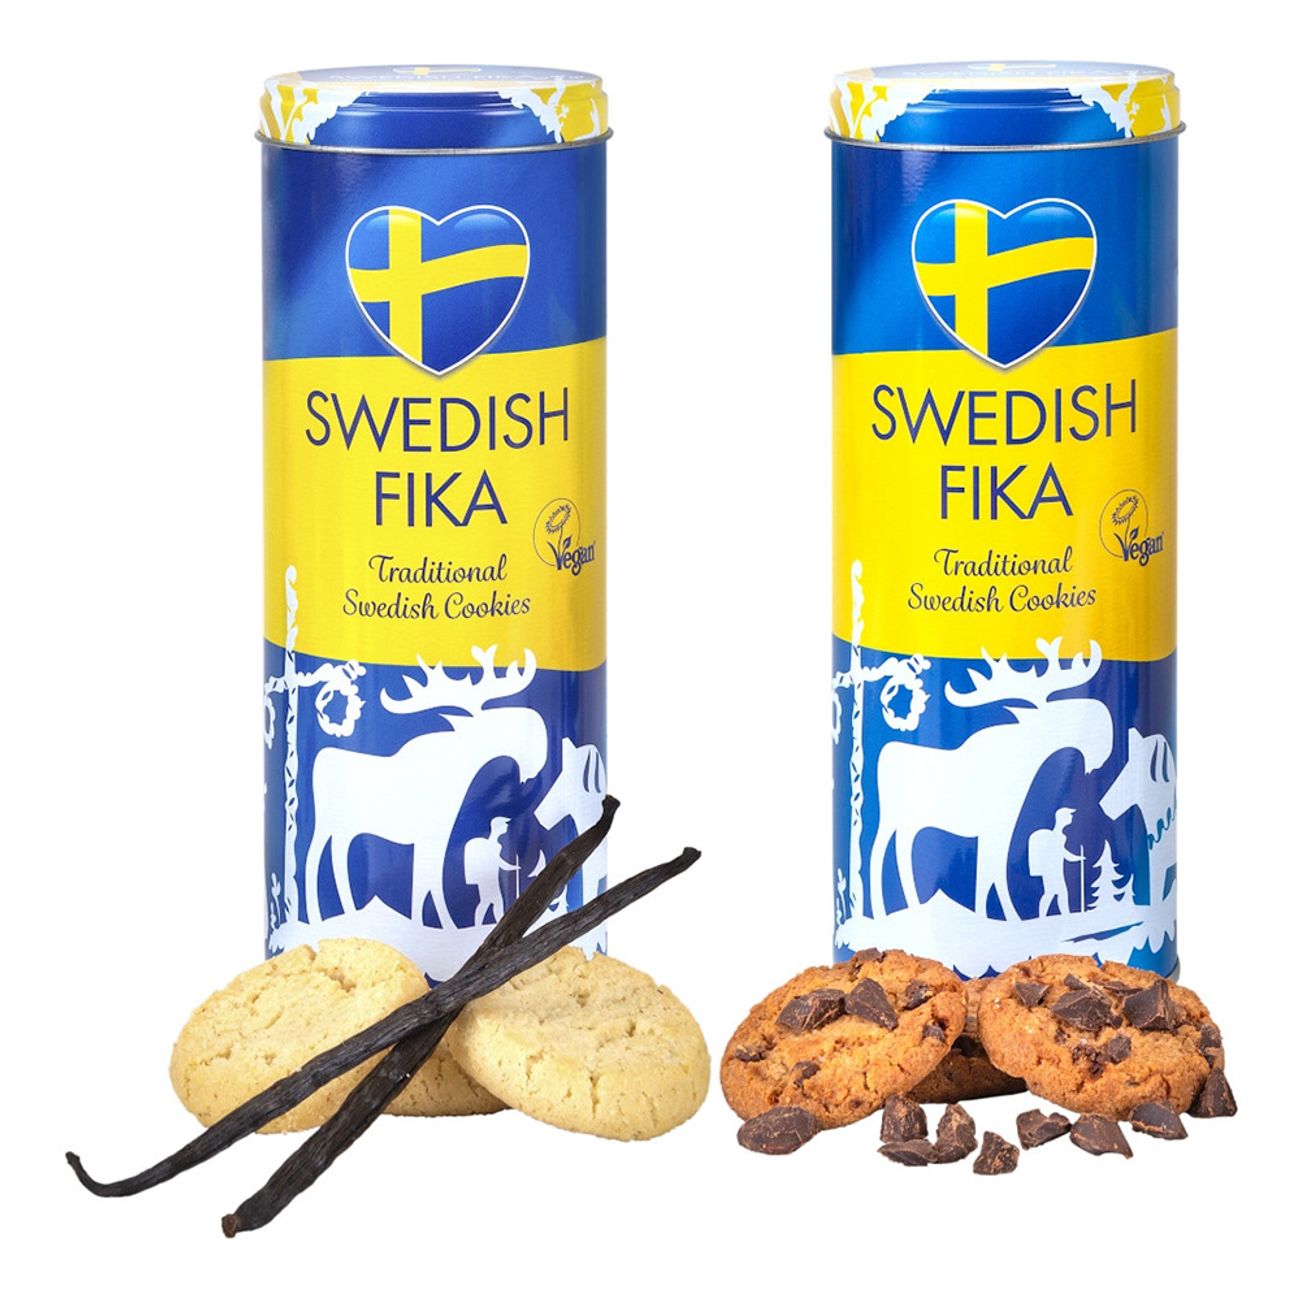 swedish-fika-kakburkar-1